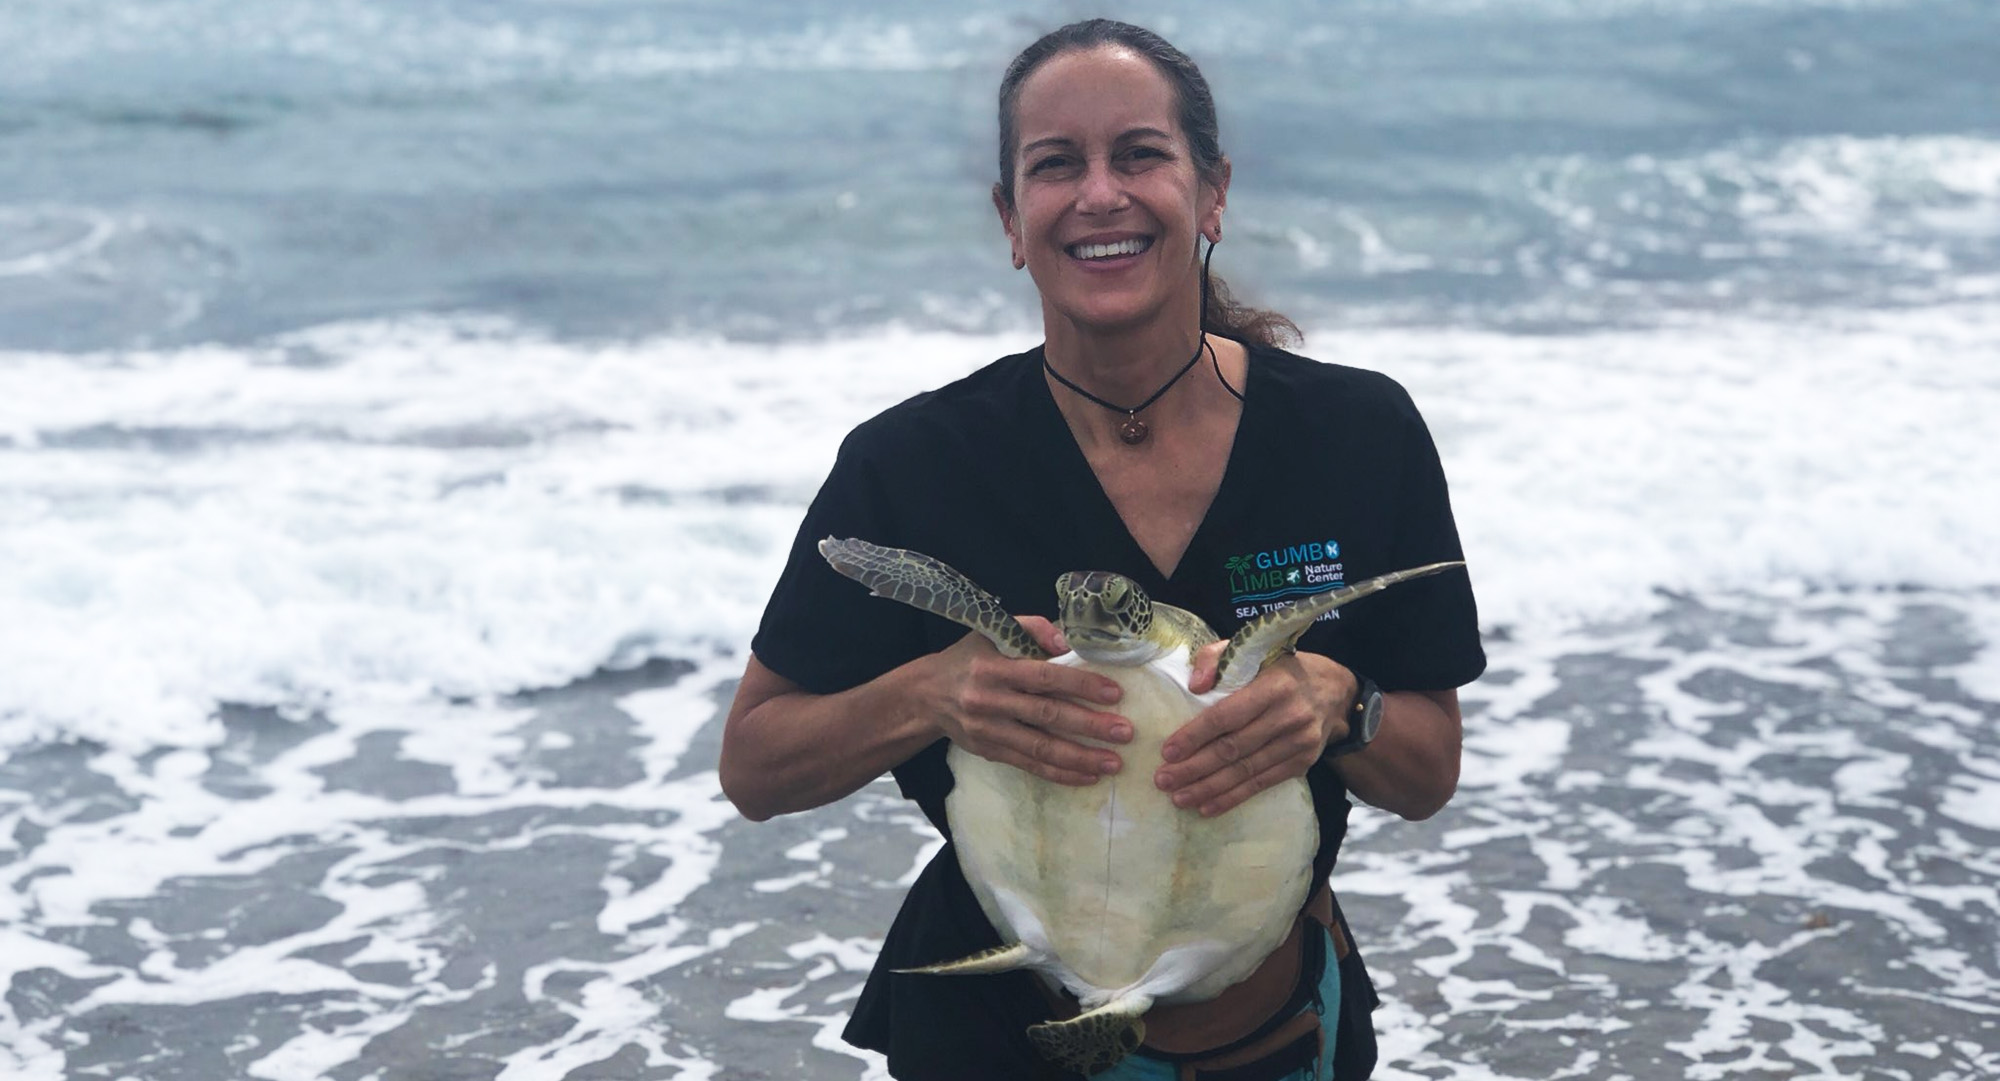 Maria Chadam, AB’88, releases a green sea turtle